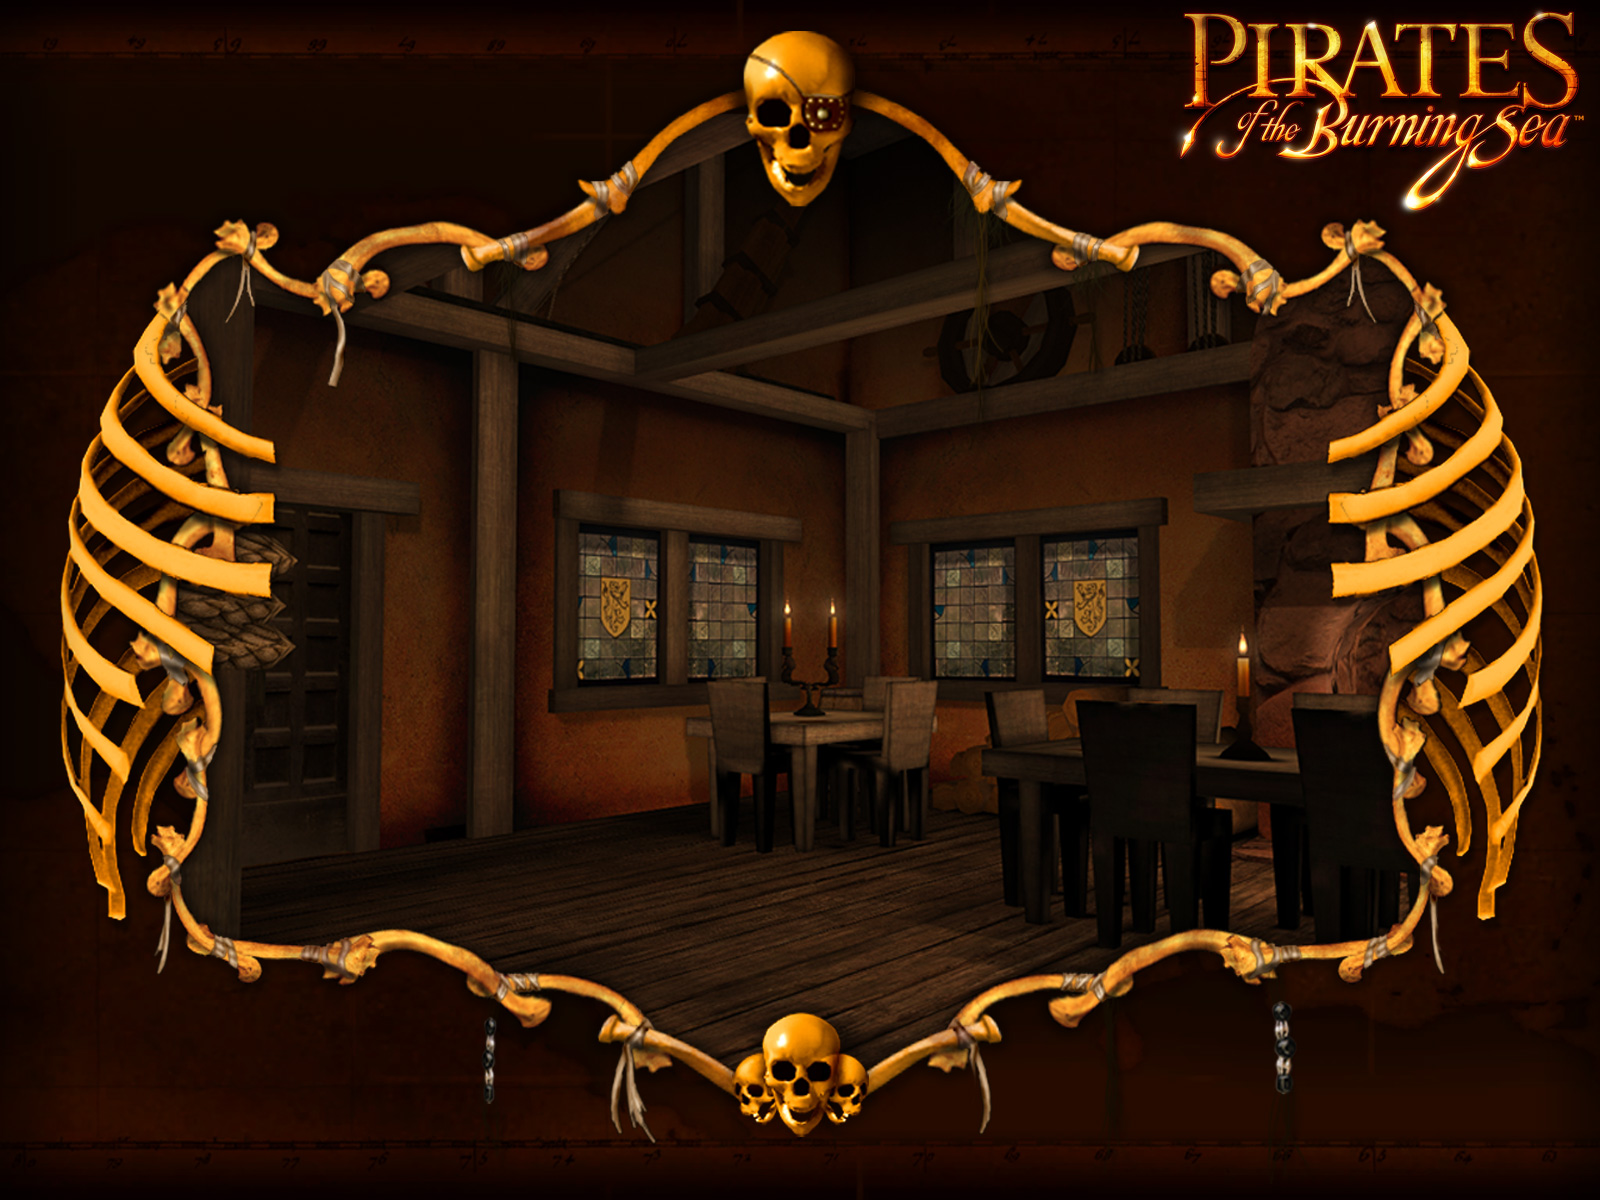 Pirates_of_the_burning_sea_02_1600x1200.jpg